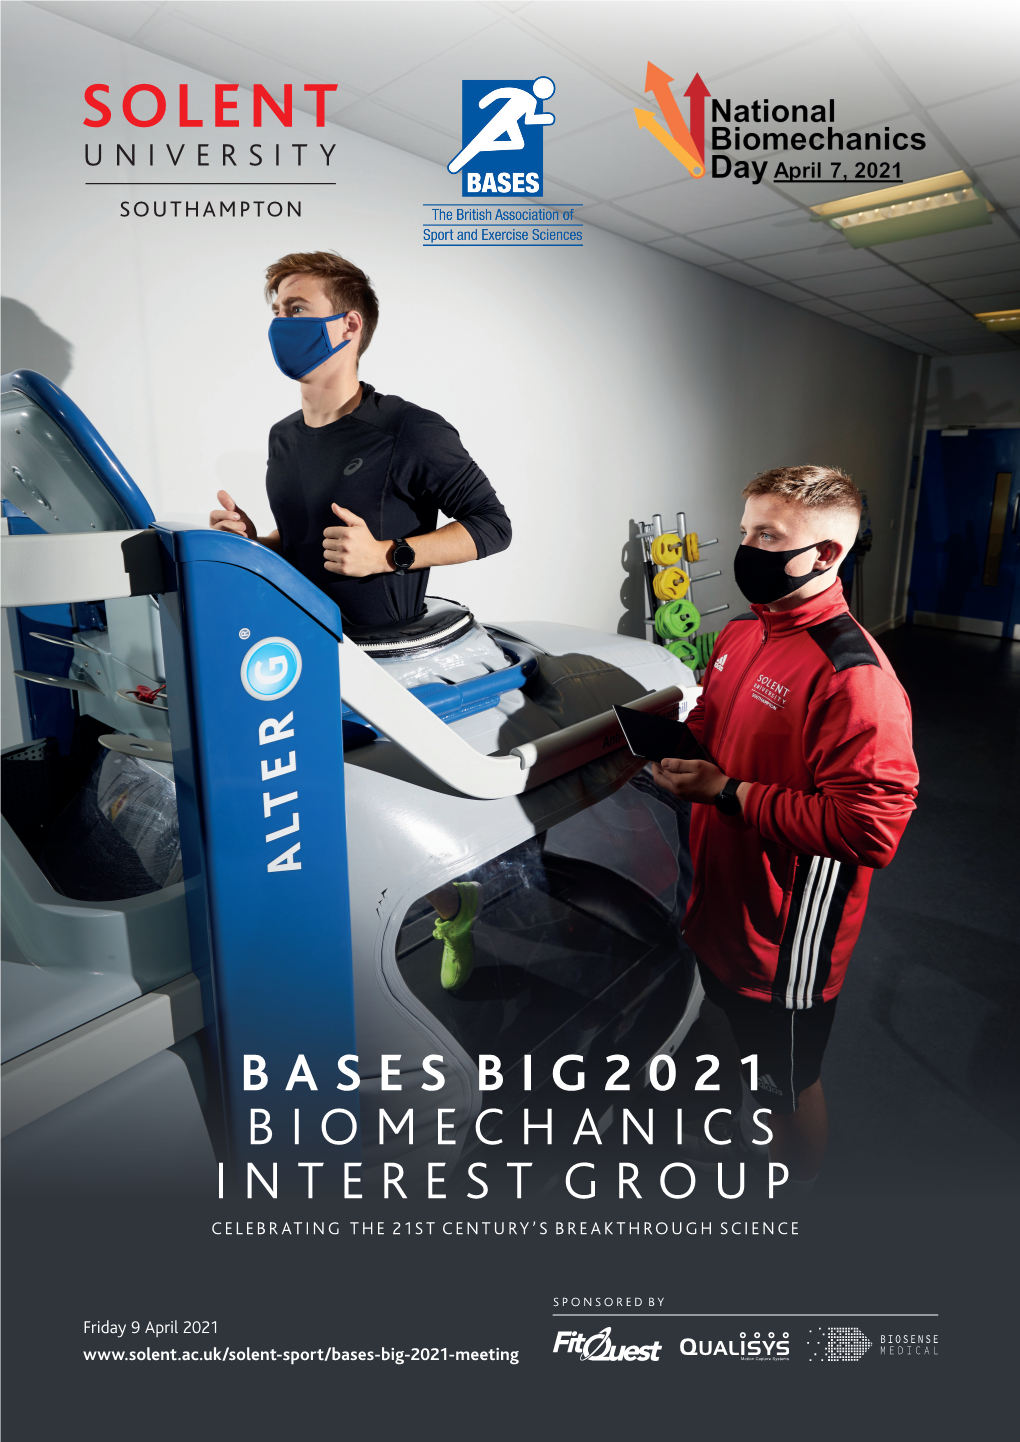 Bases Big2021 Biomechanics Interest Group Celebrating the 21St Century’S Breakthrough Science